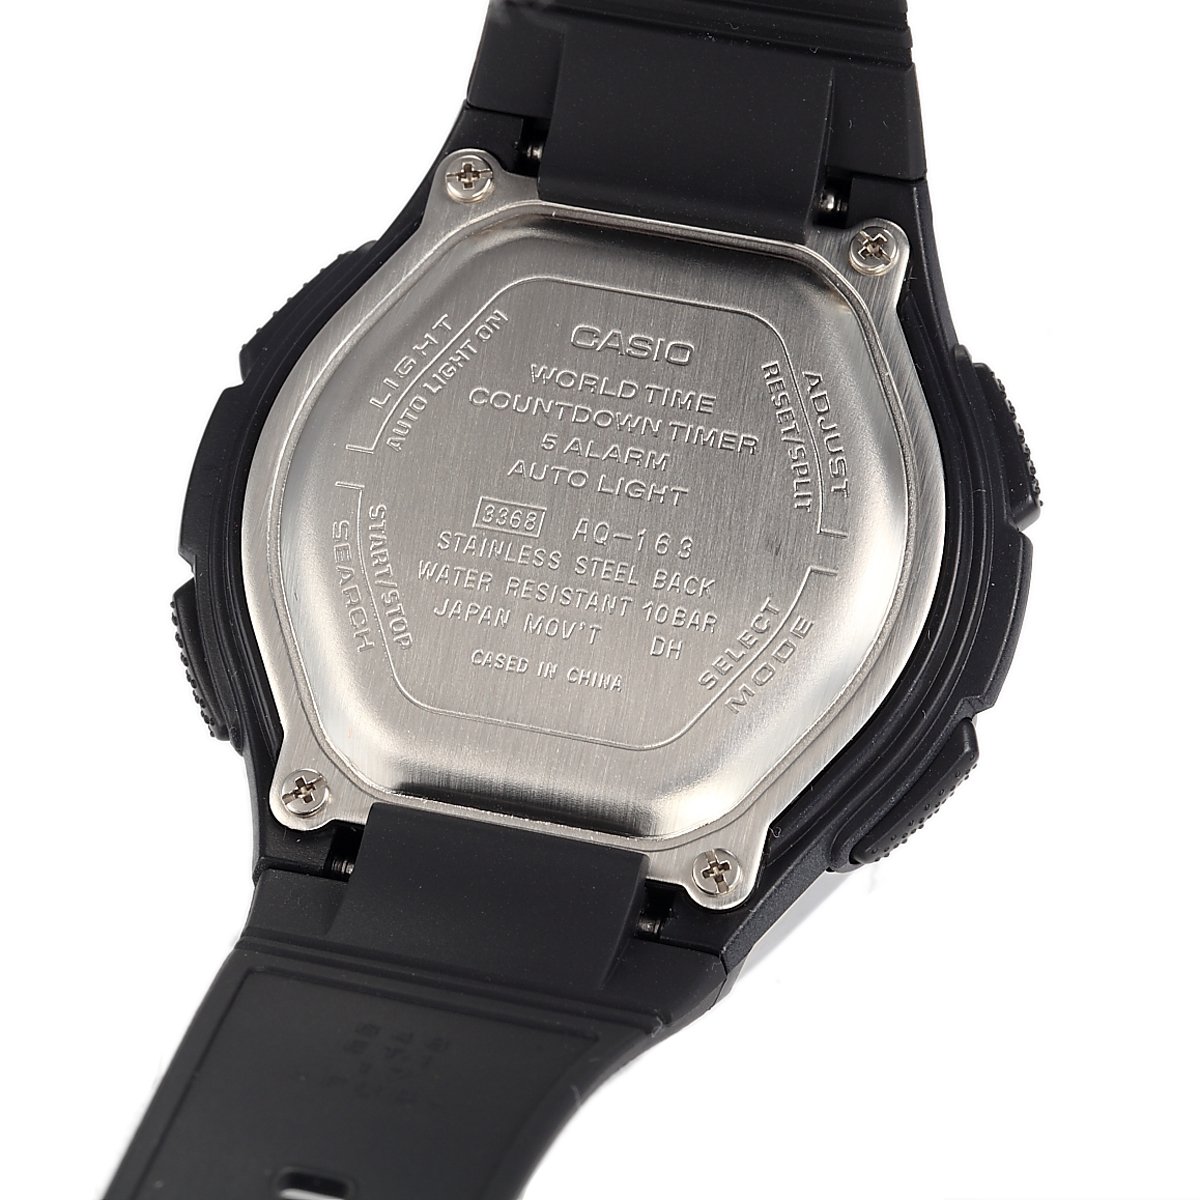 Casio Men's Analogue-Digital Japanese Watch with Plastic Strap AQ-163W-1B2, Black/Silver, Core